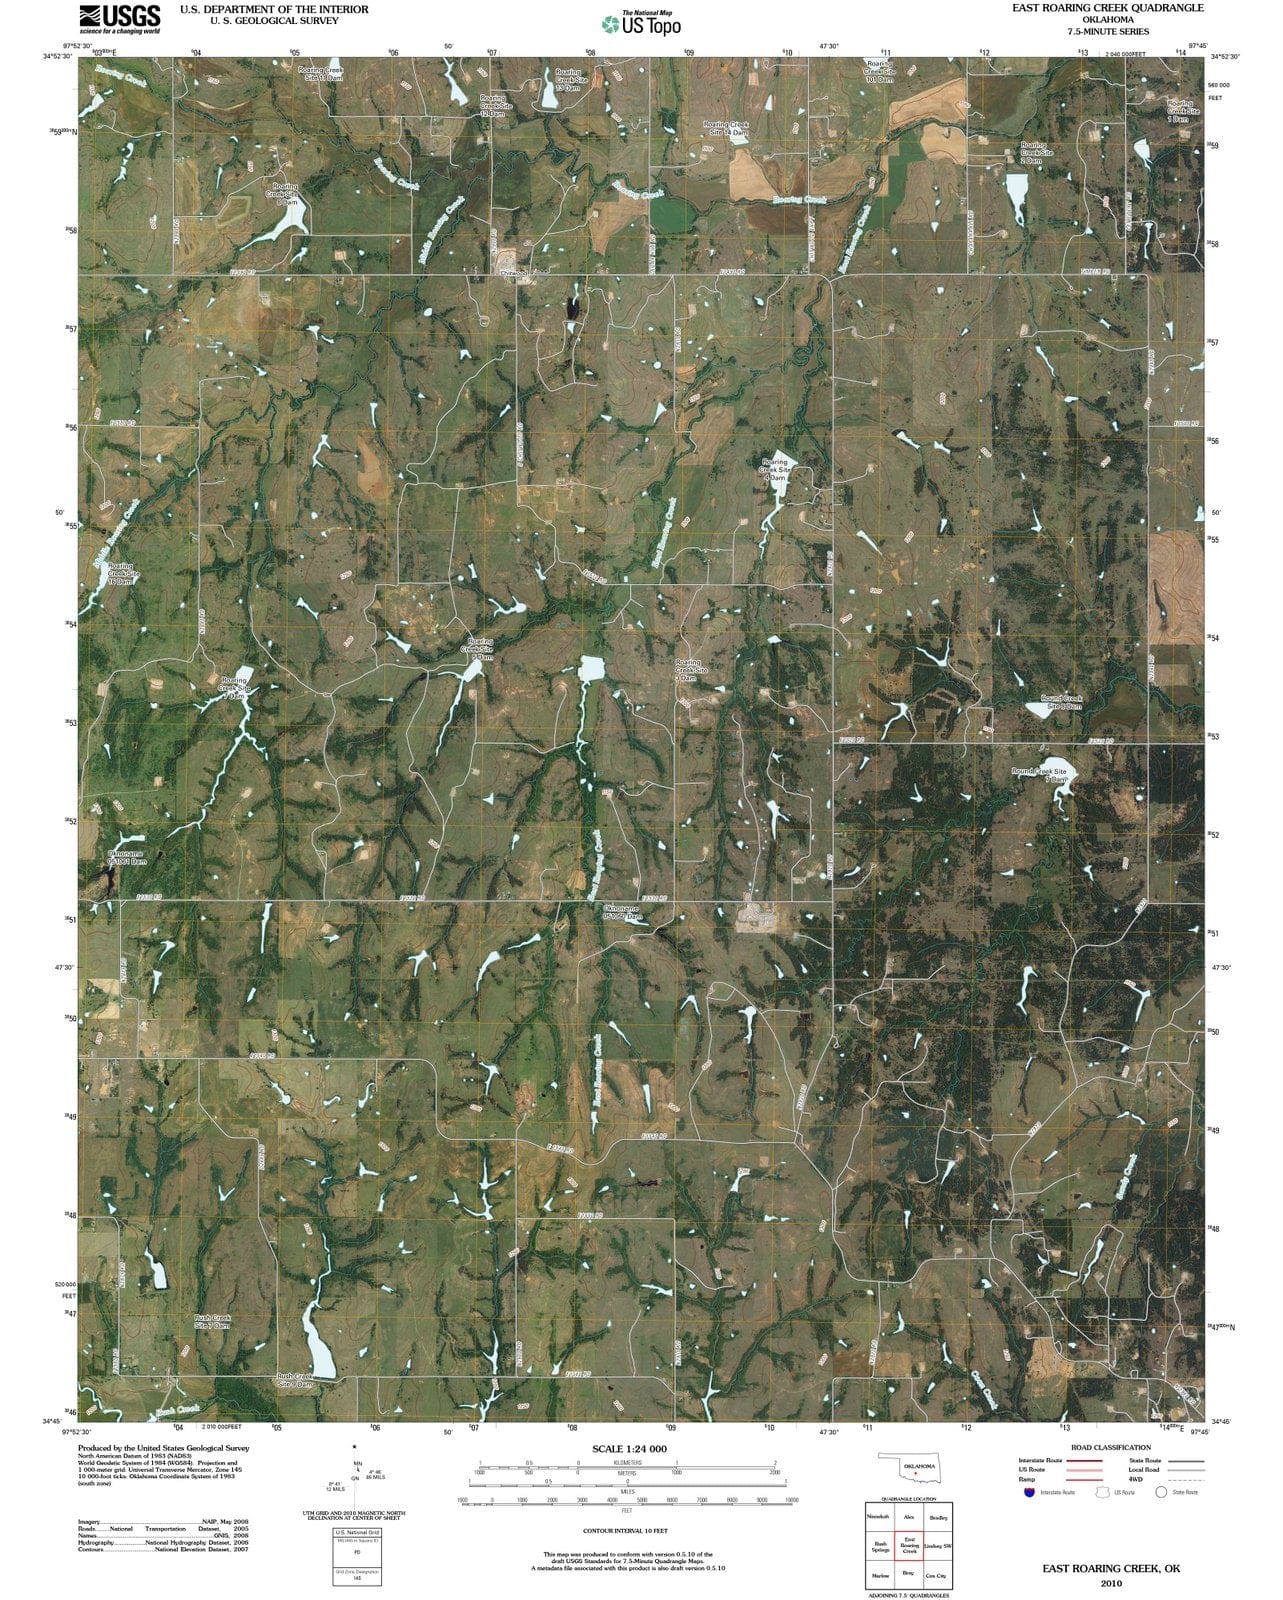 2010 East Roaring Creek, OK - Oklahoma - USGS Topographic Map